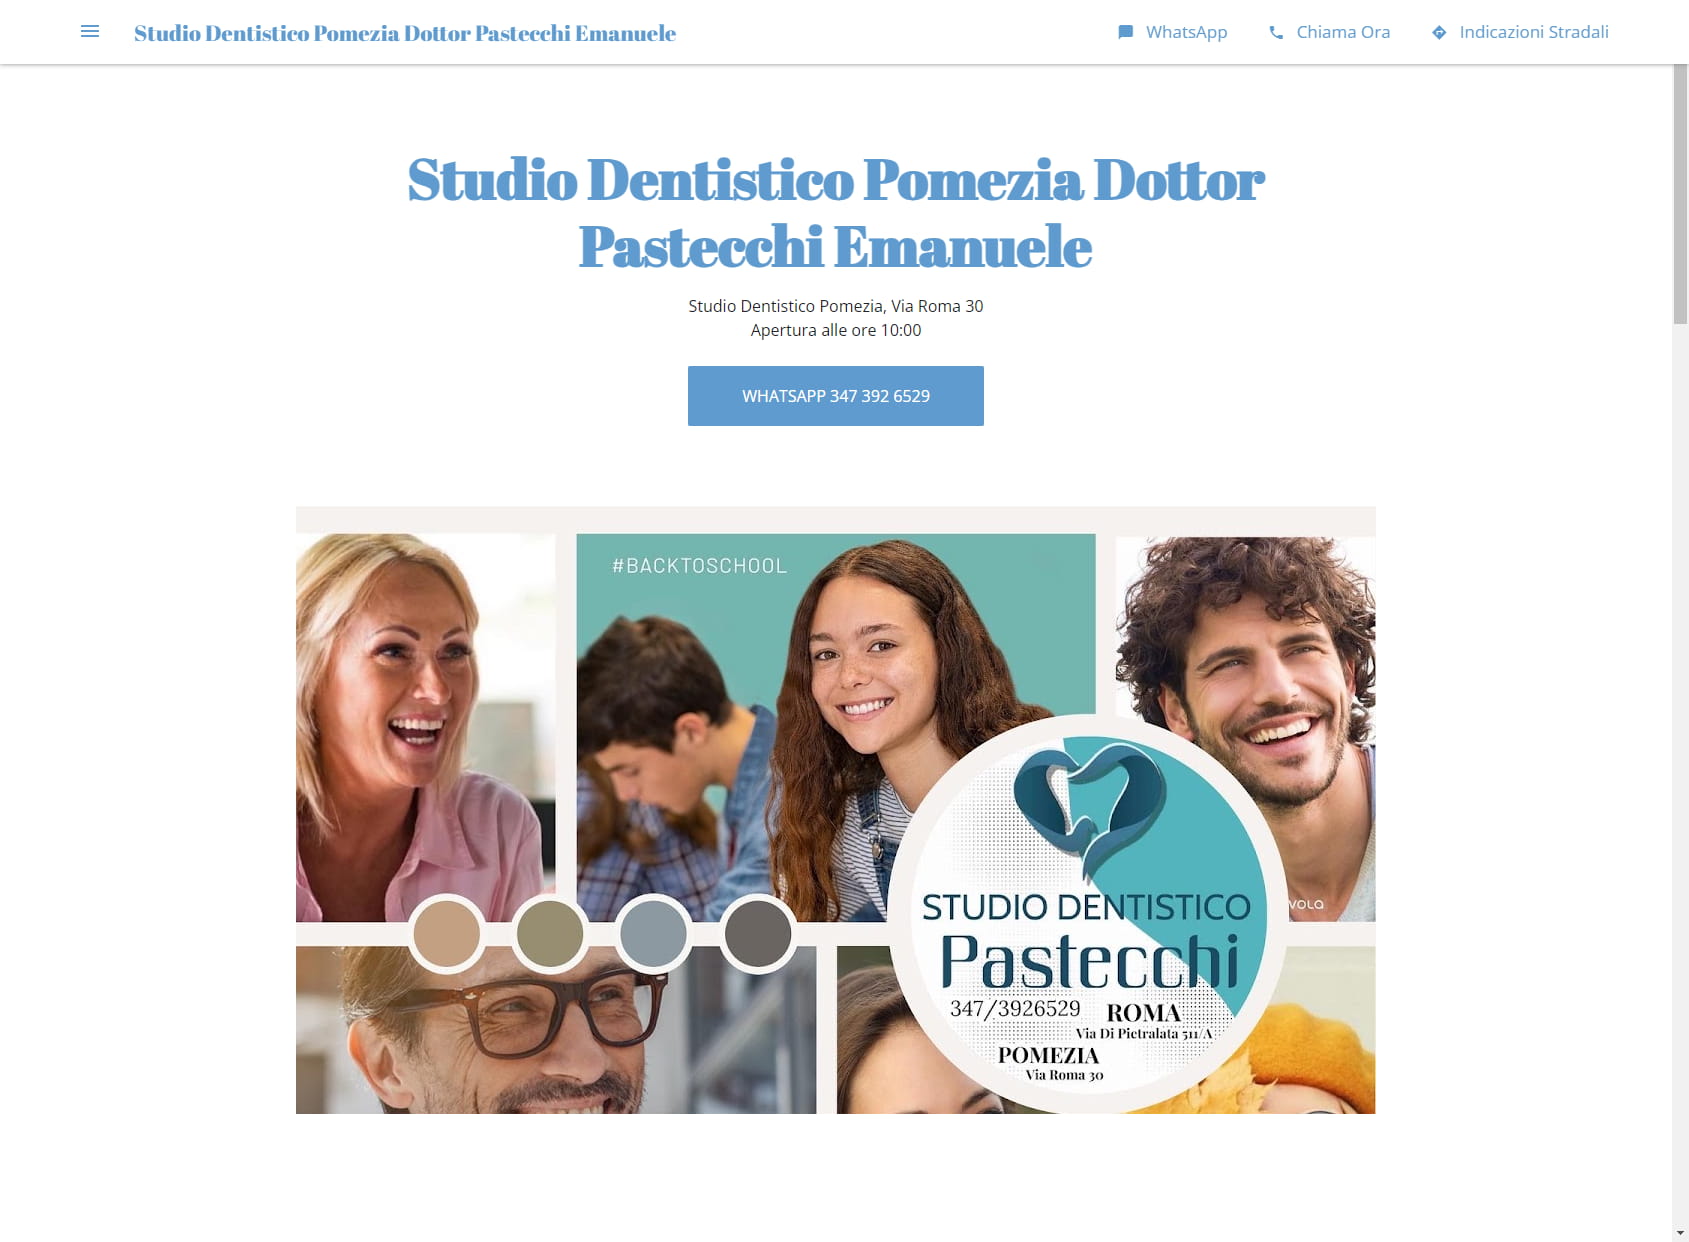 Studio Dentistico Pomezia Dottor Pastecchi Emanuele